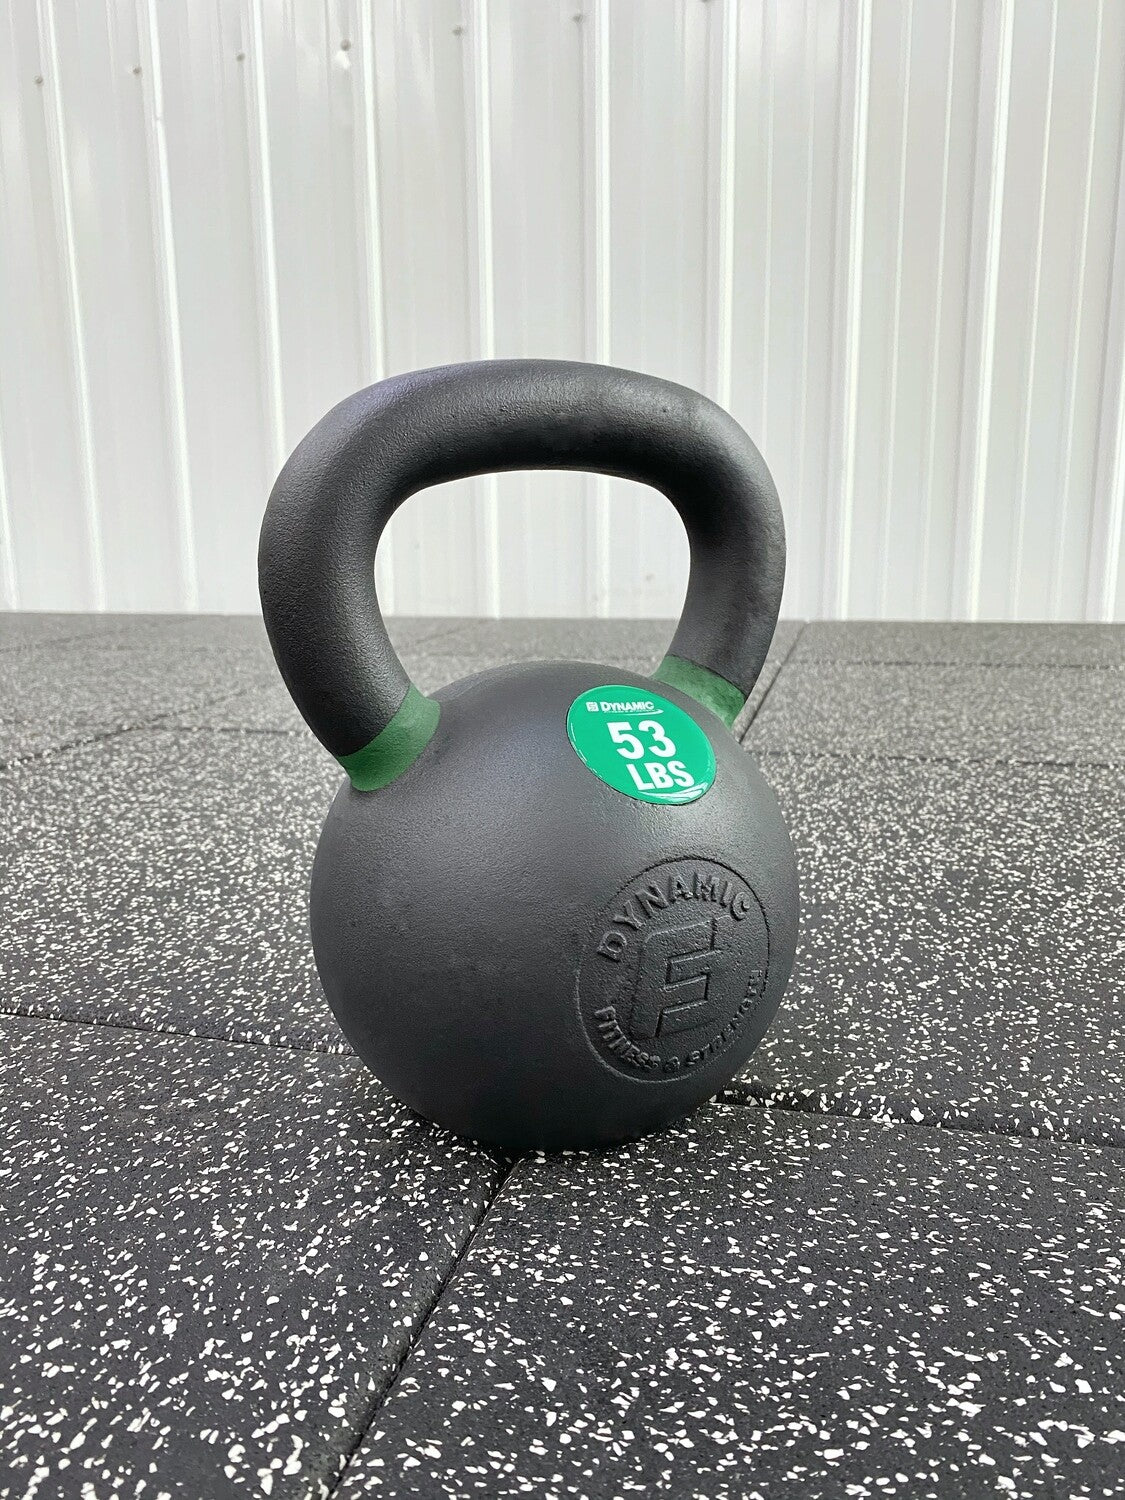 Dynamic Kettlebells – Weight Room Equipment